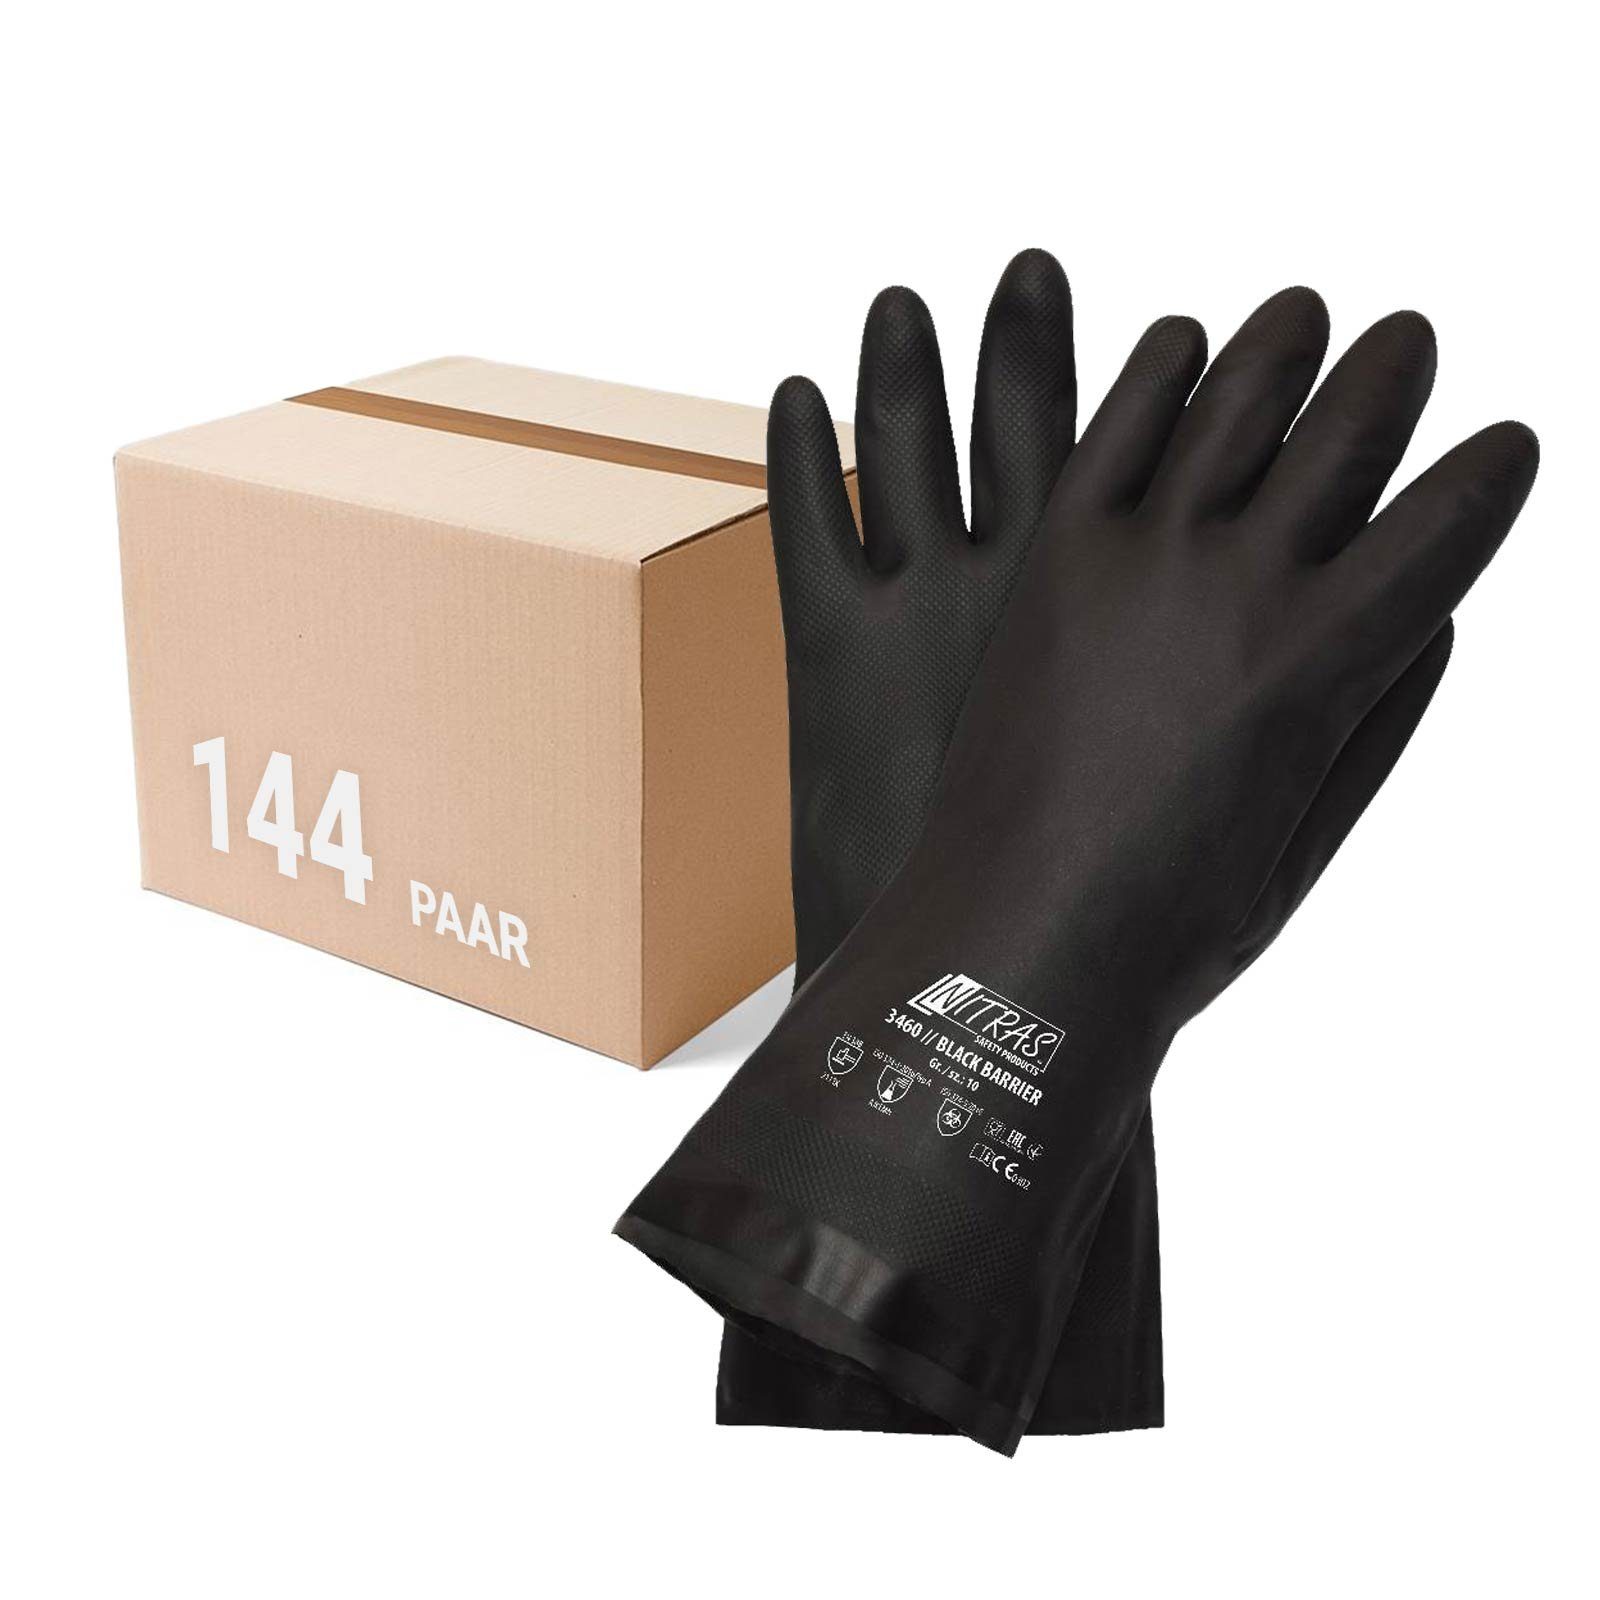 Nitras Putzhandschuh NITRAS Chloroprene-Handschuhe 3460 Black Barrier schwarz - 144 Paar (Set)